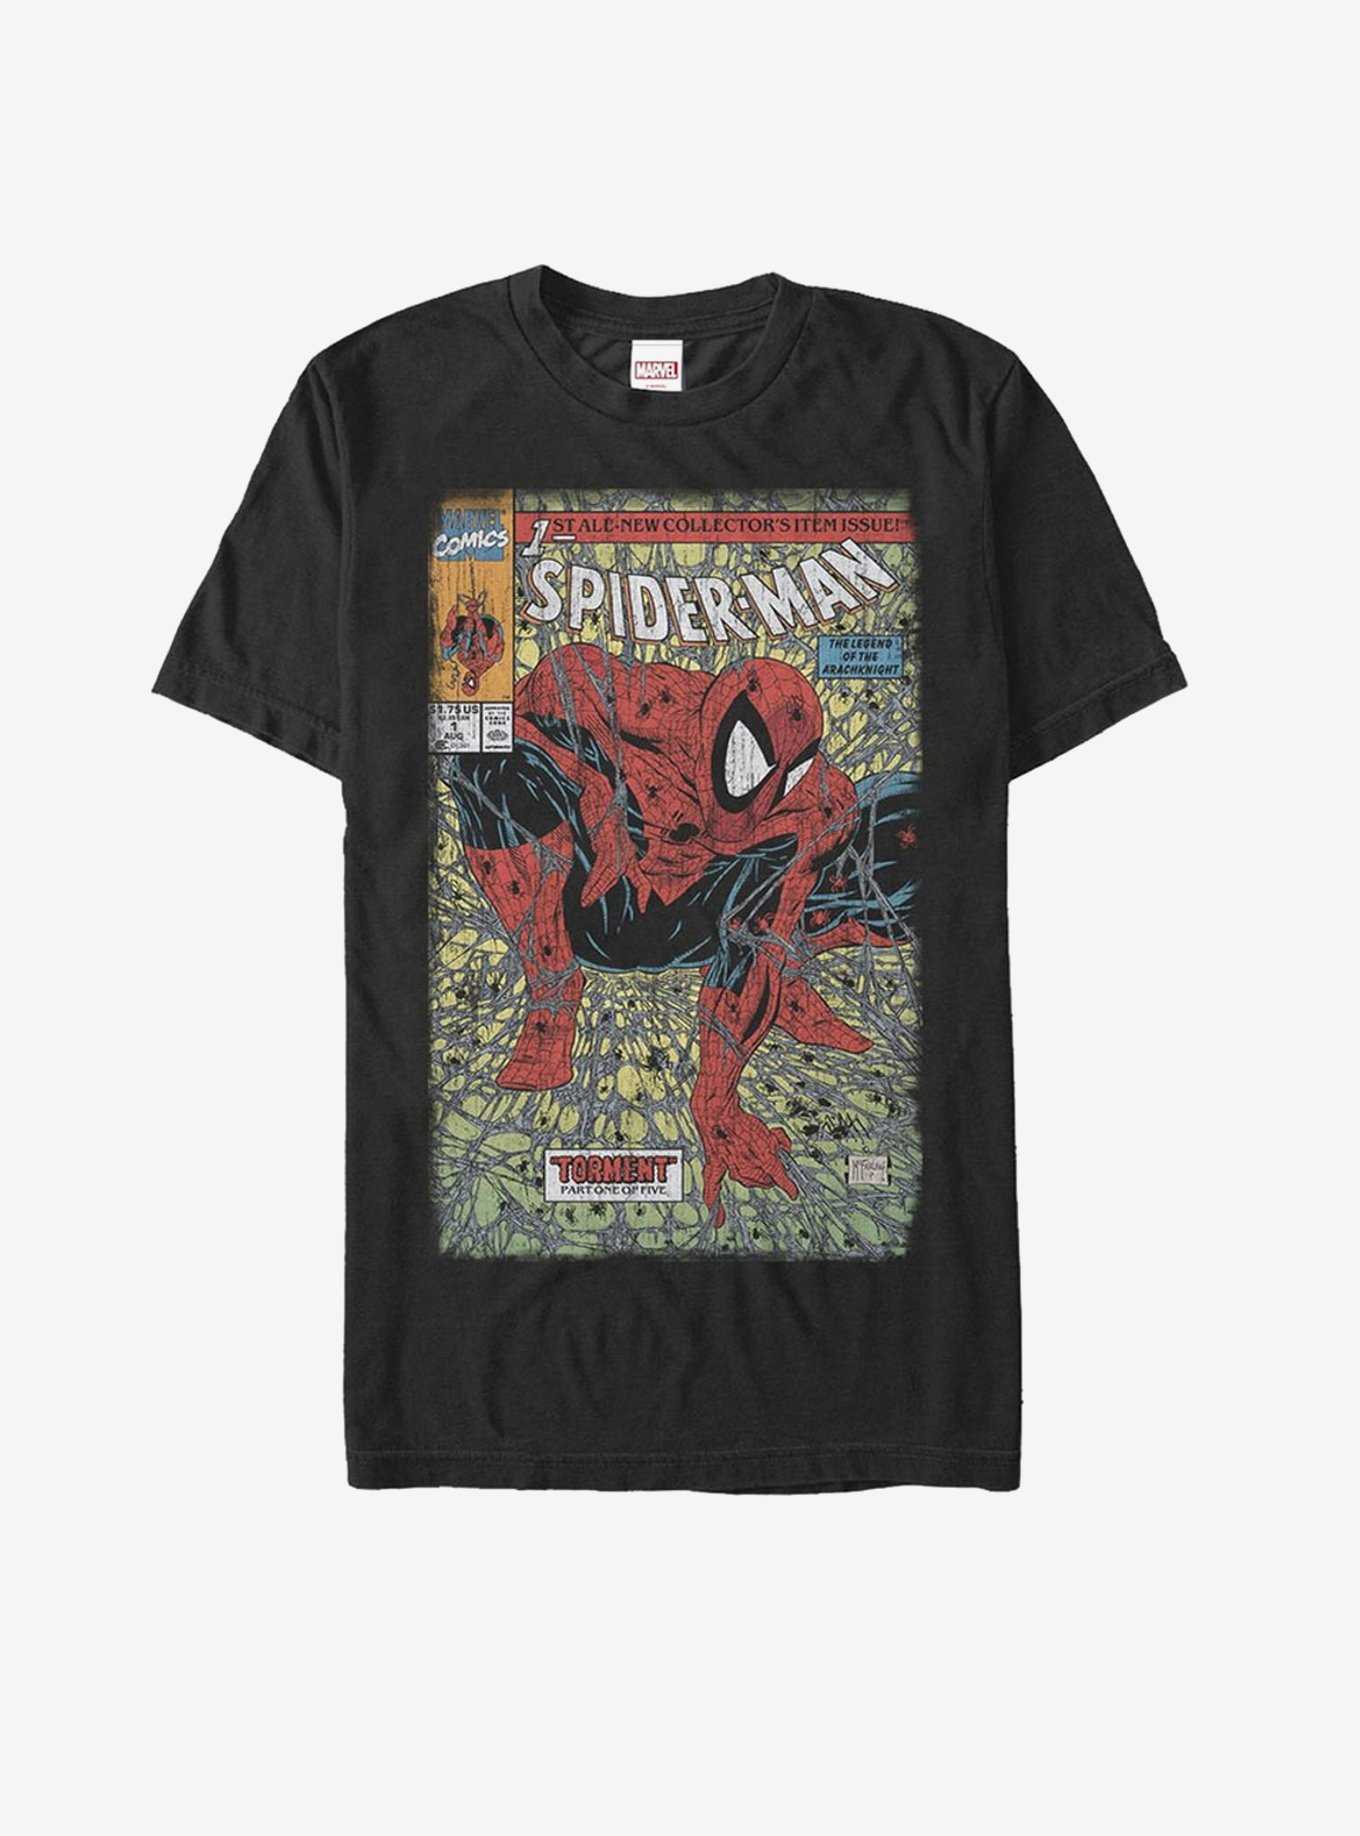 Spider-Man. Authentic Vintage Patch